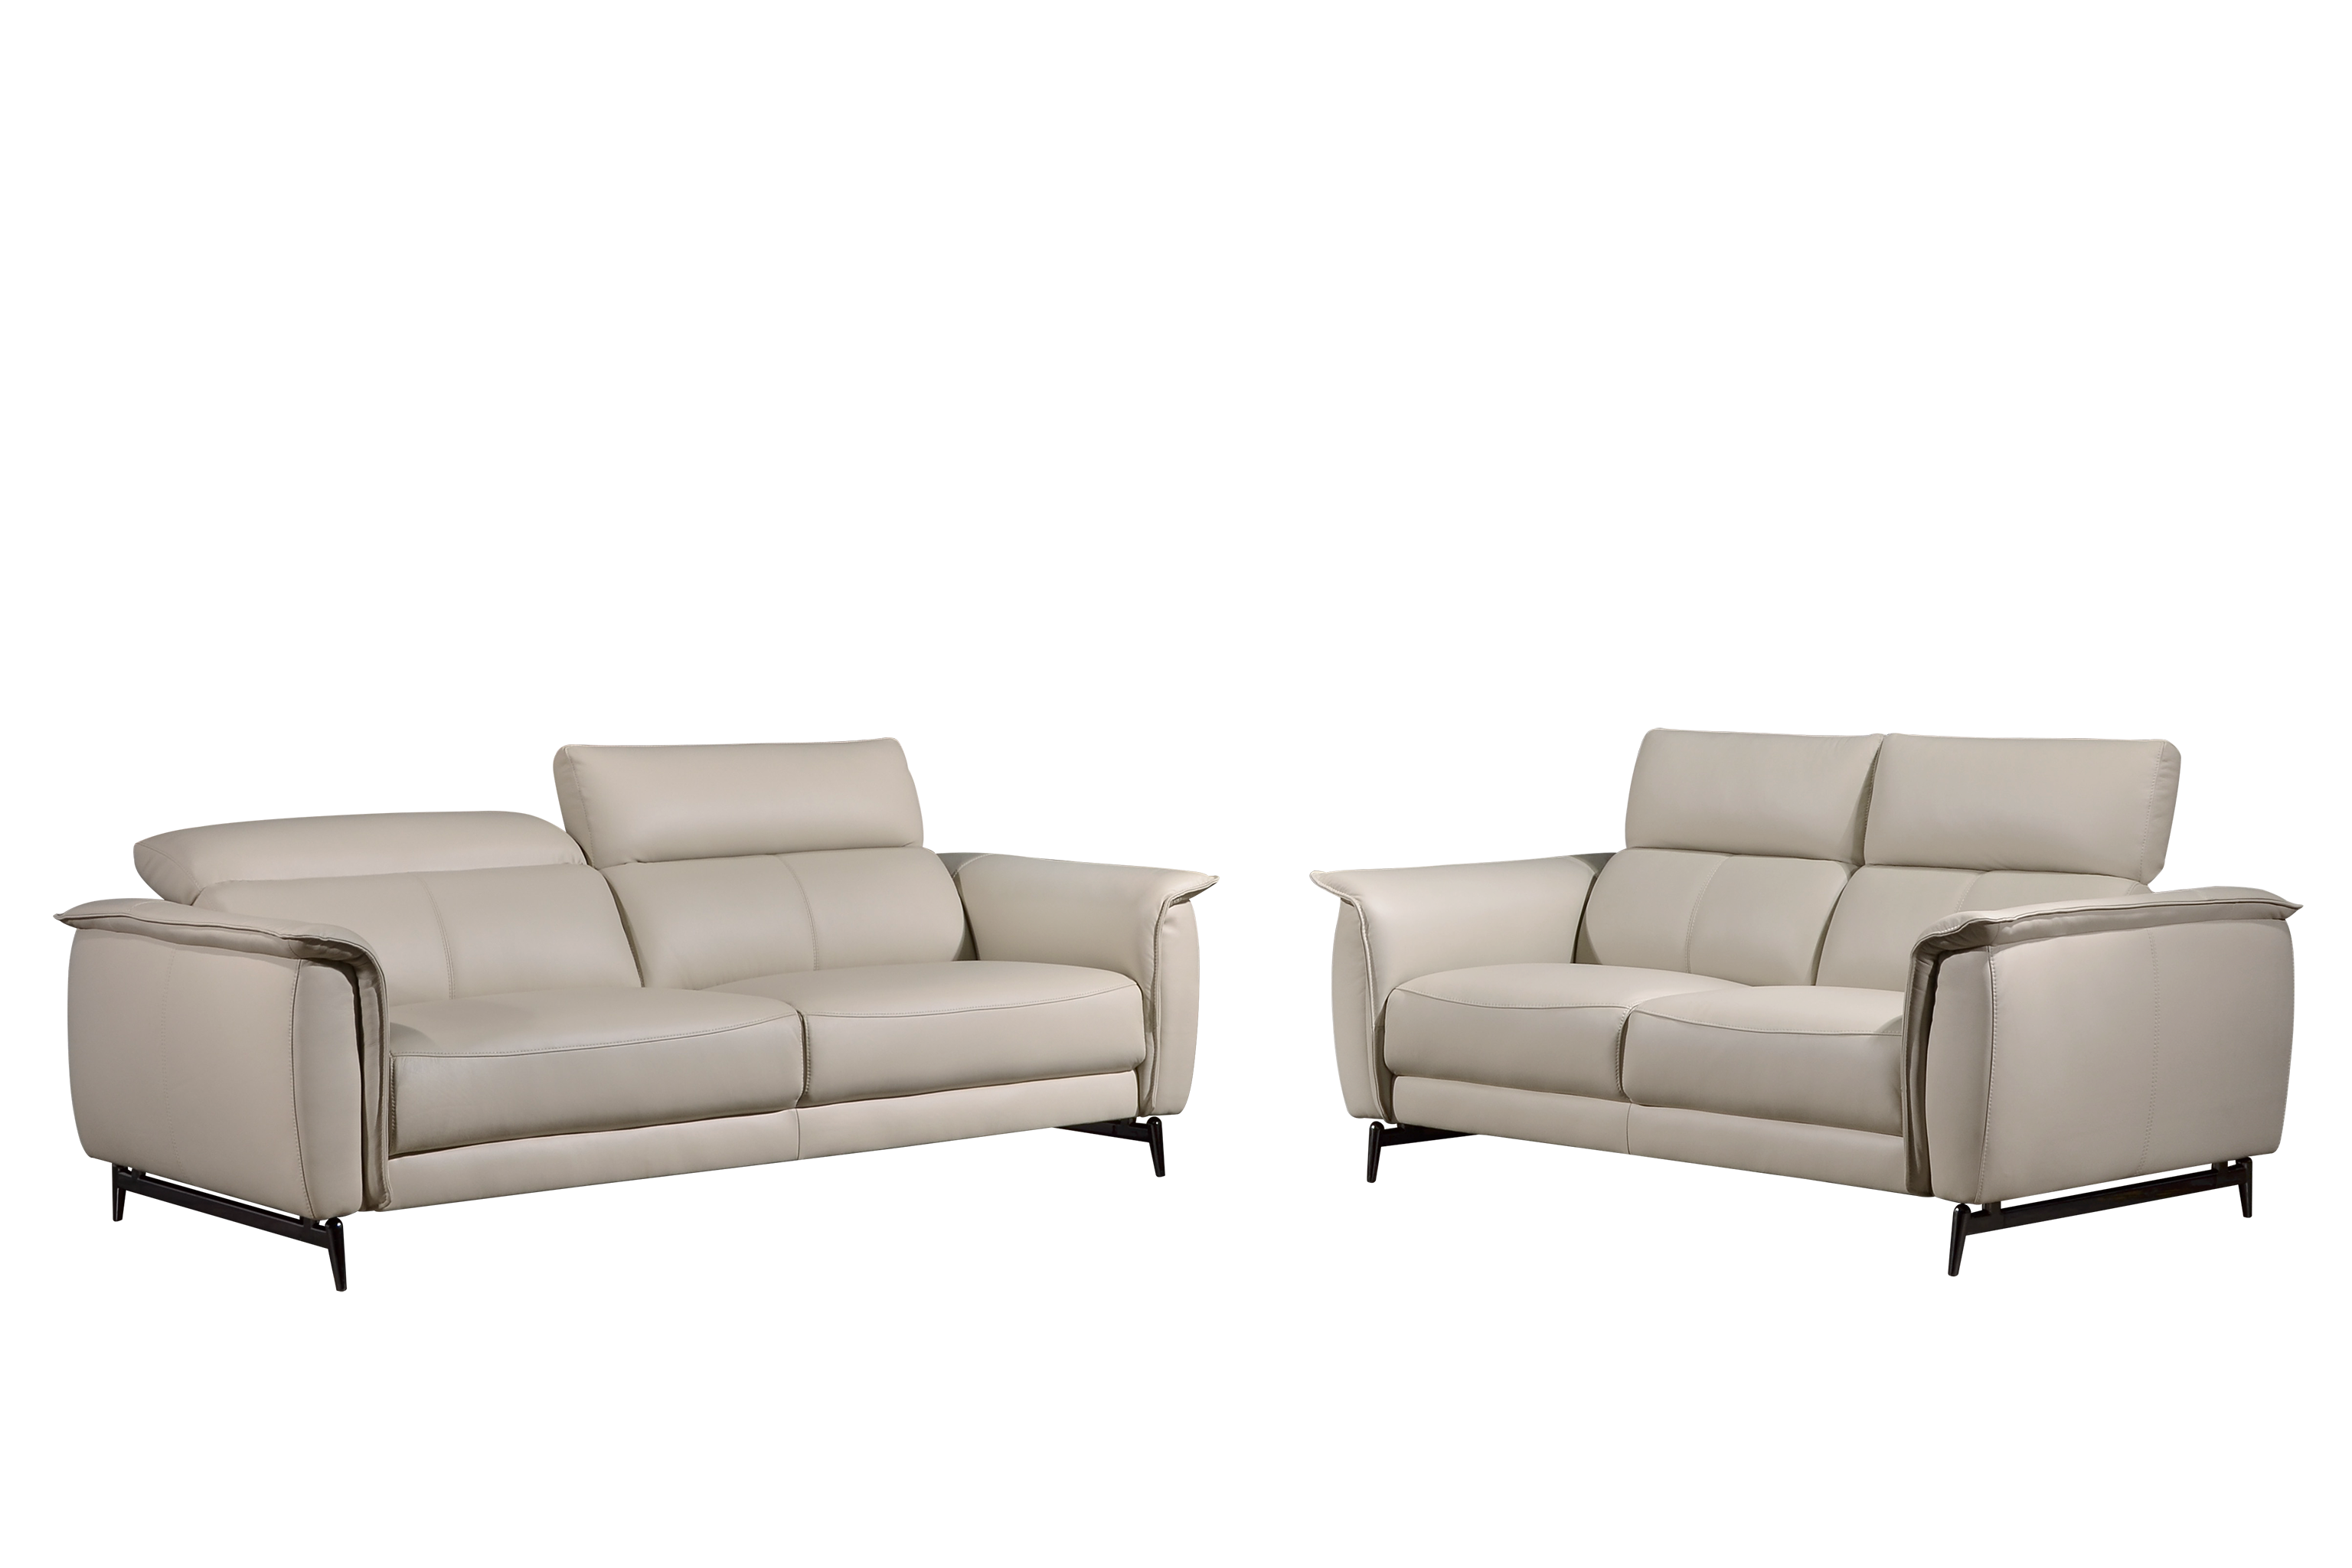 RIVIERA 2.5 Seater Sofa In Leather By Castilla